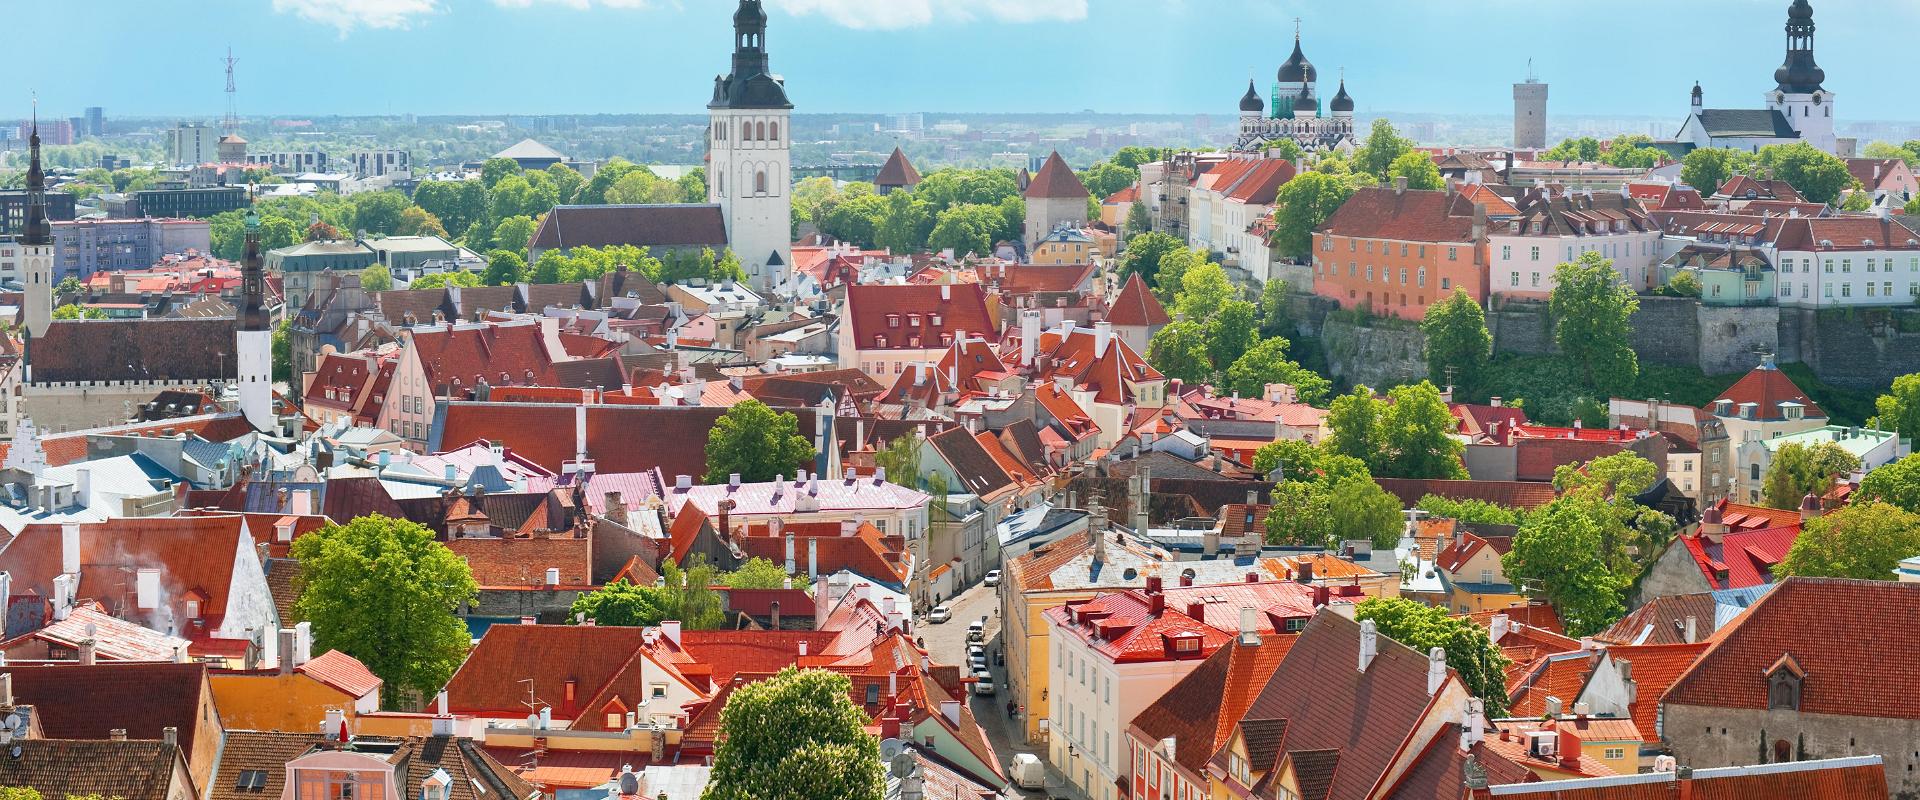 Tallinn Private Old Town Walking Tour & Round-Trip Transfer